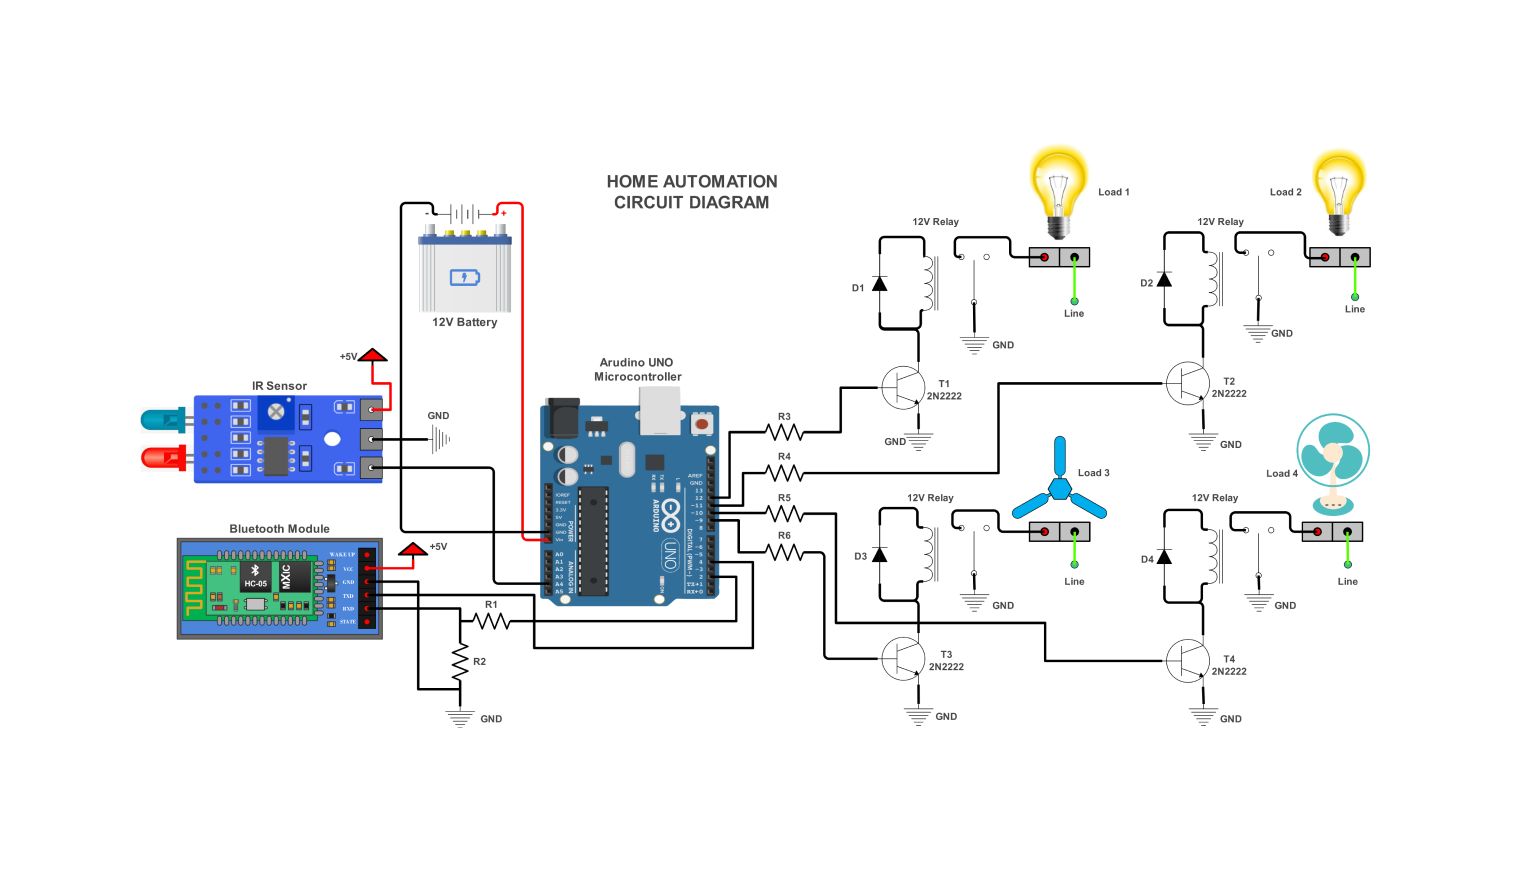 Home automation circuit diagram